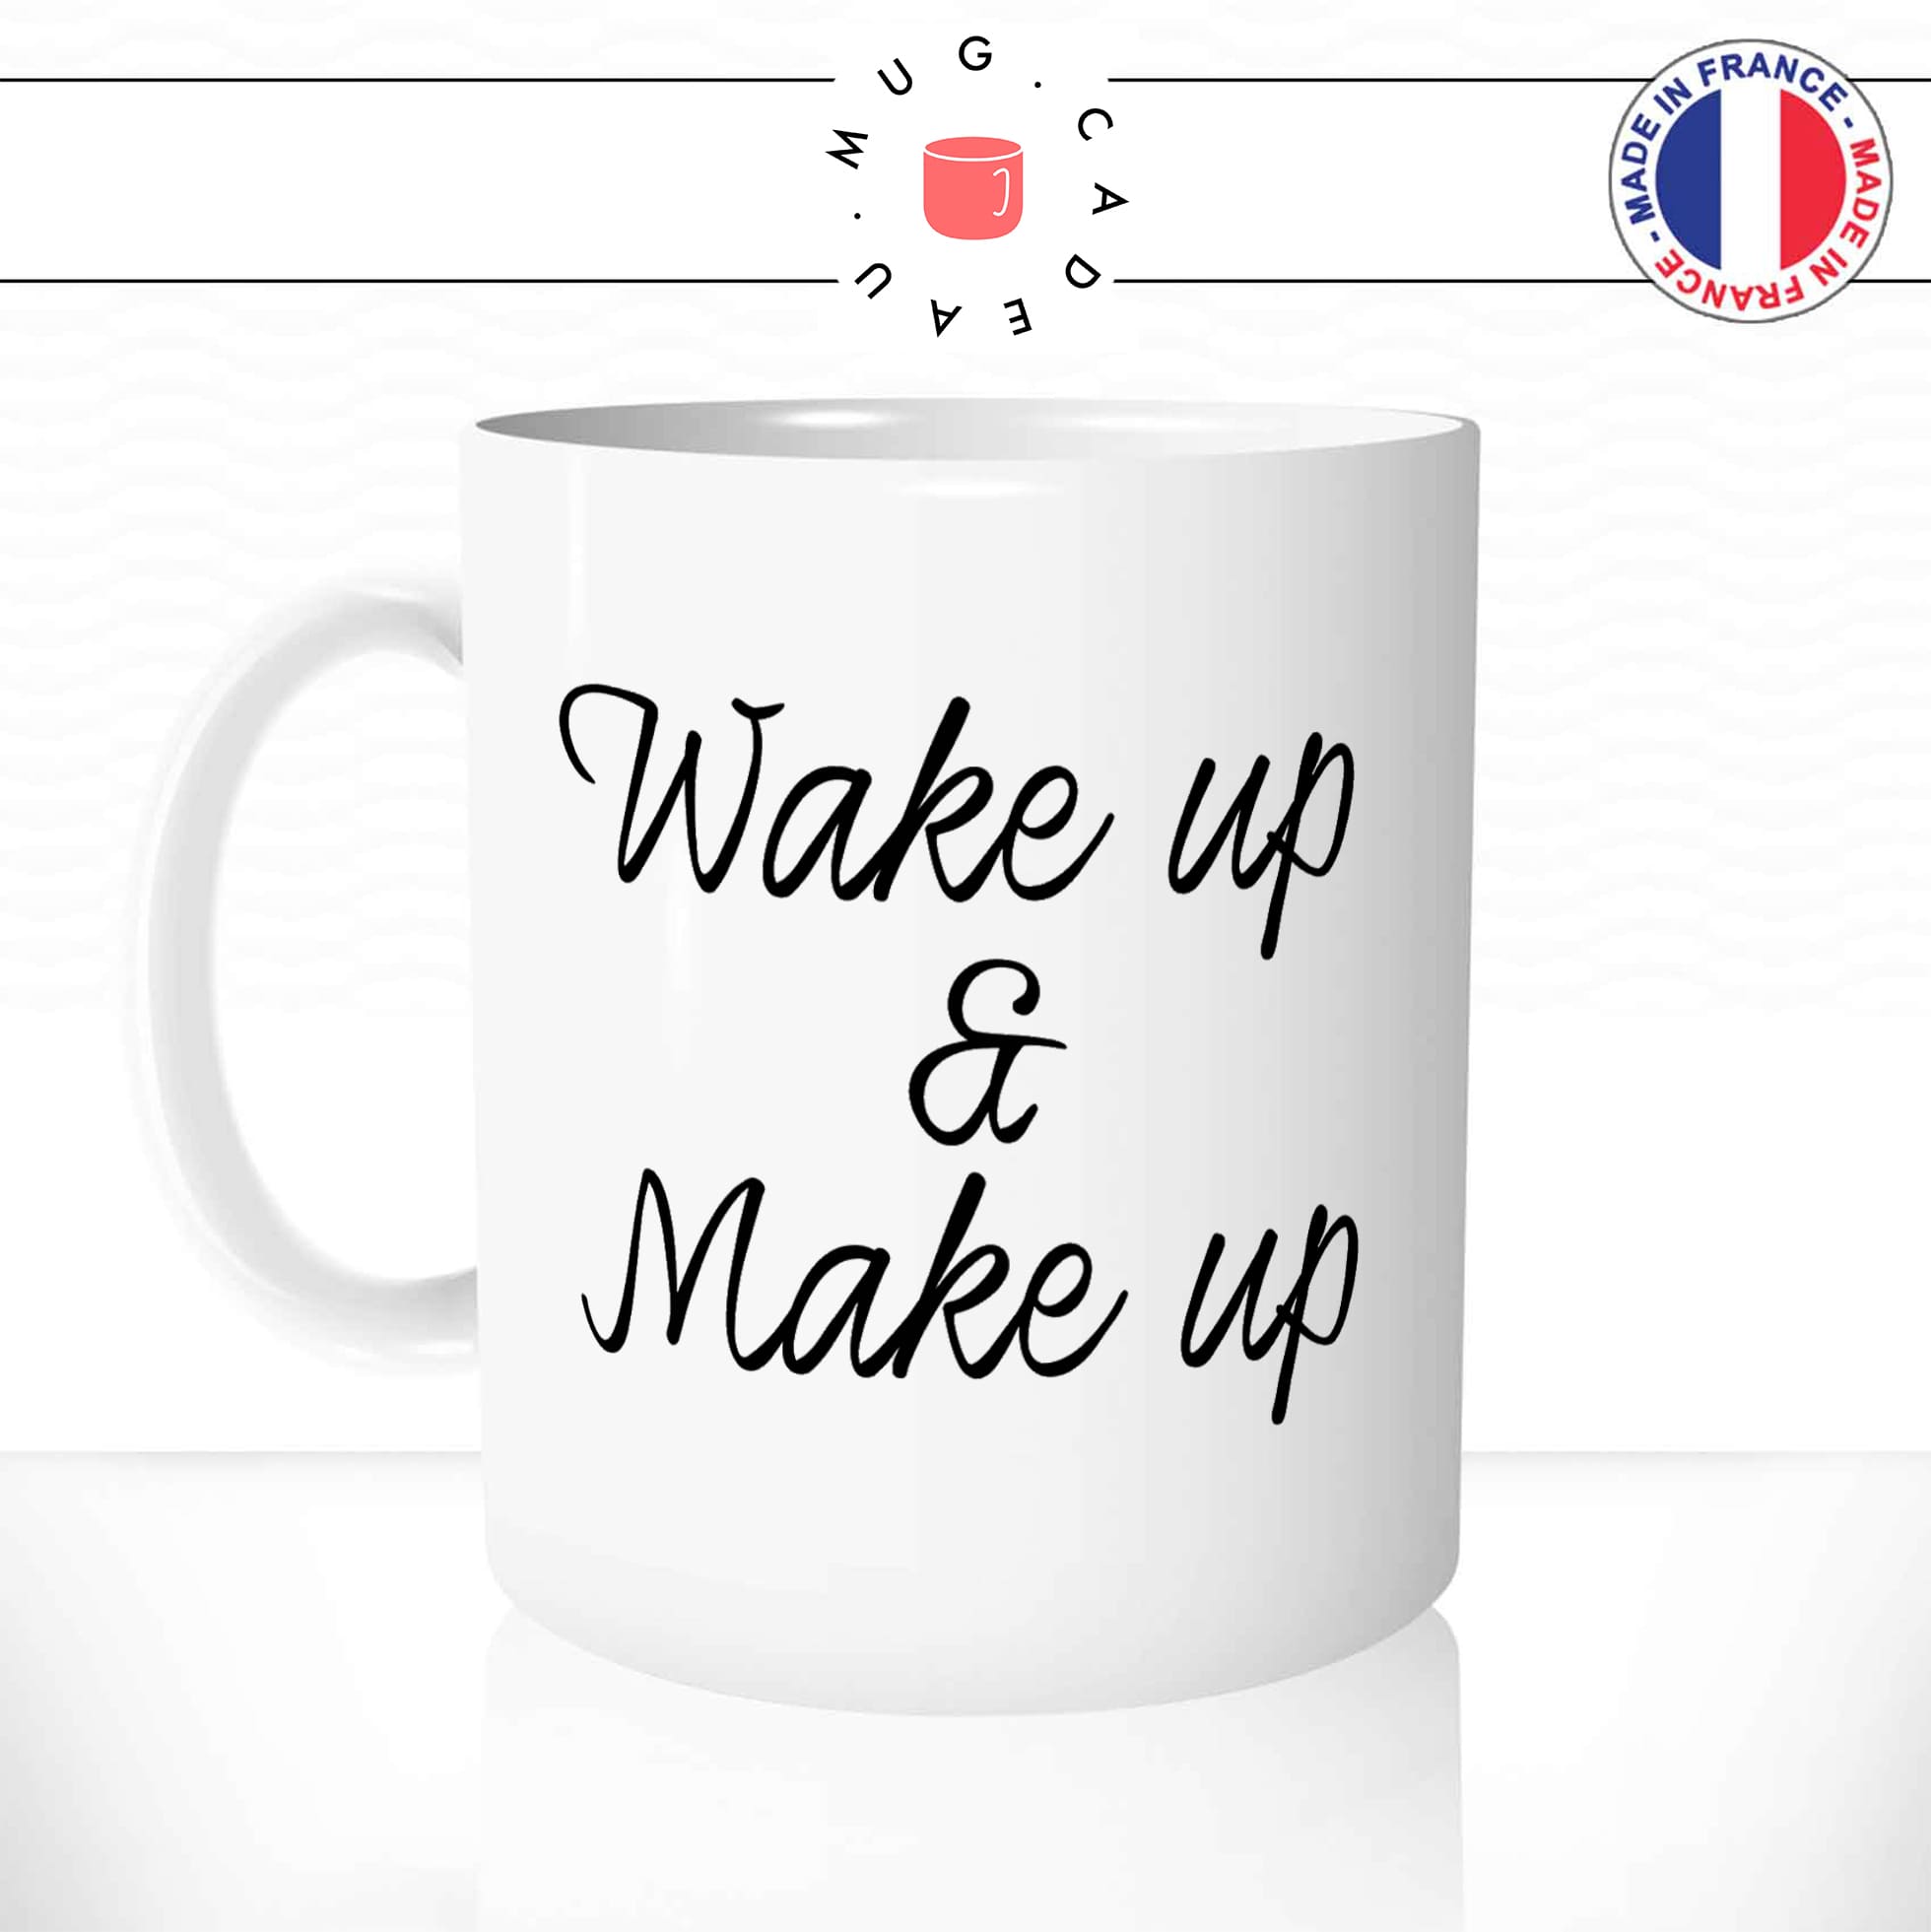 Mug Wake Up & Make Up